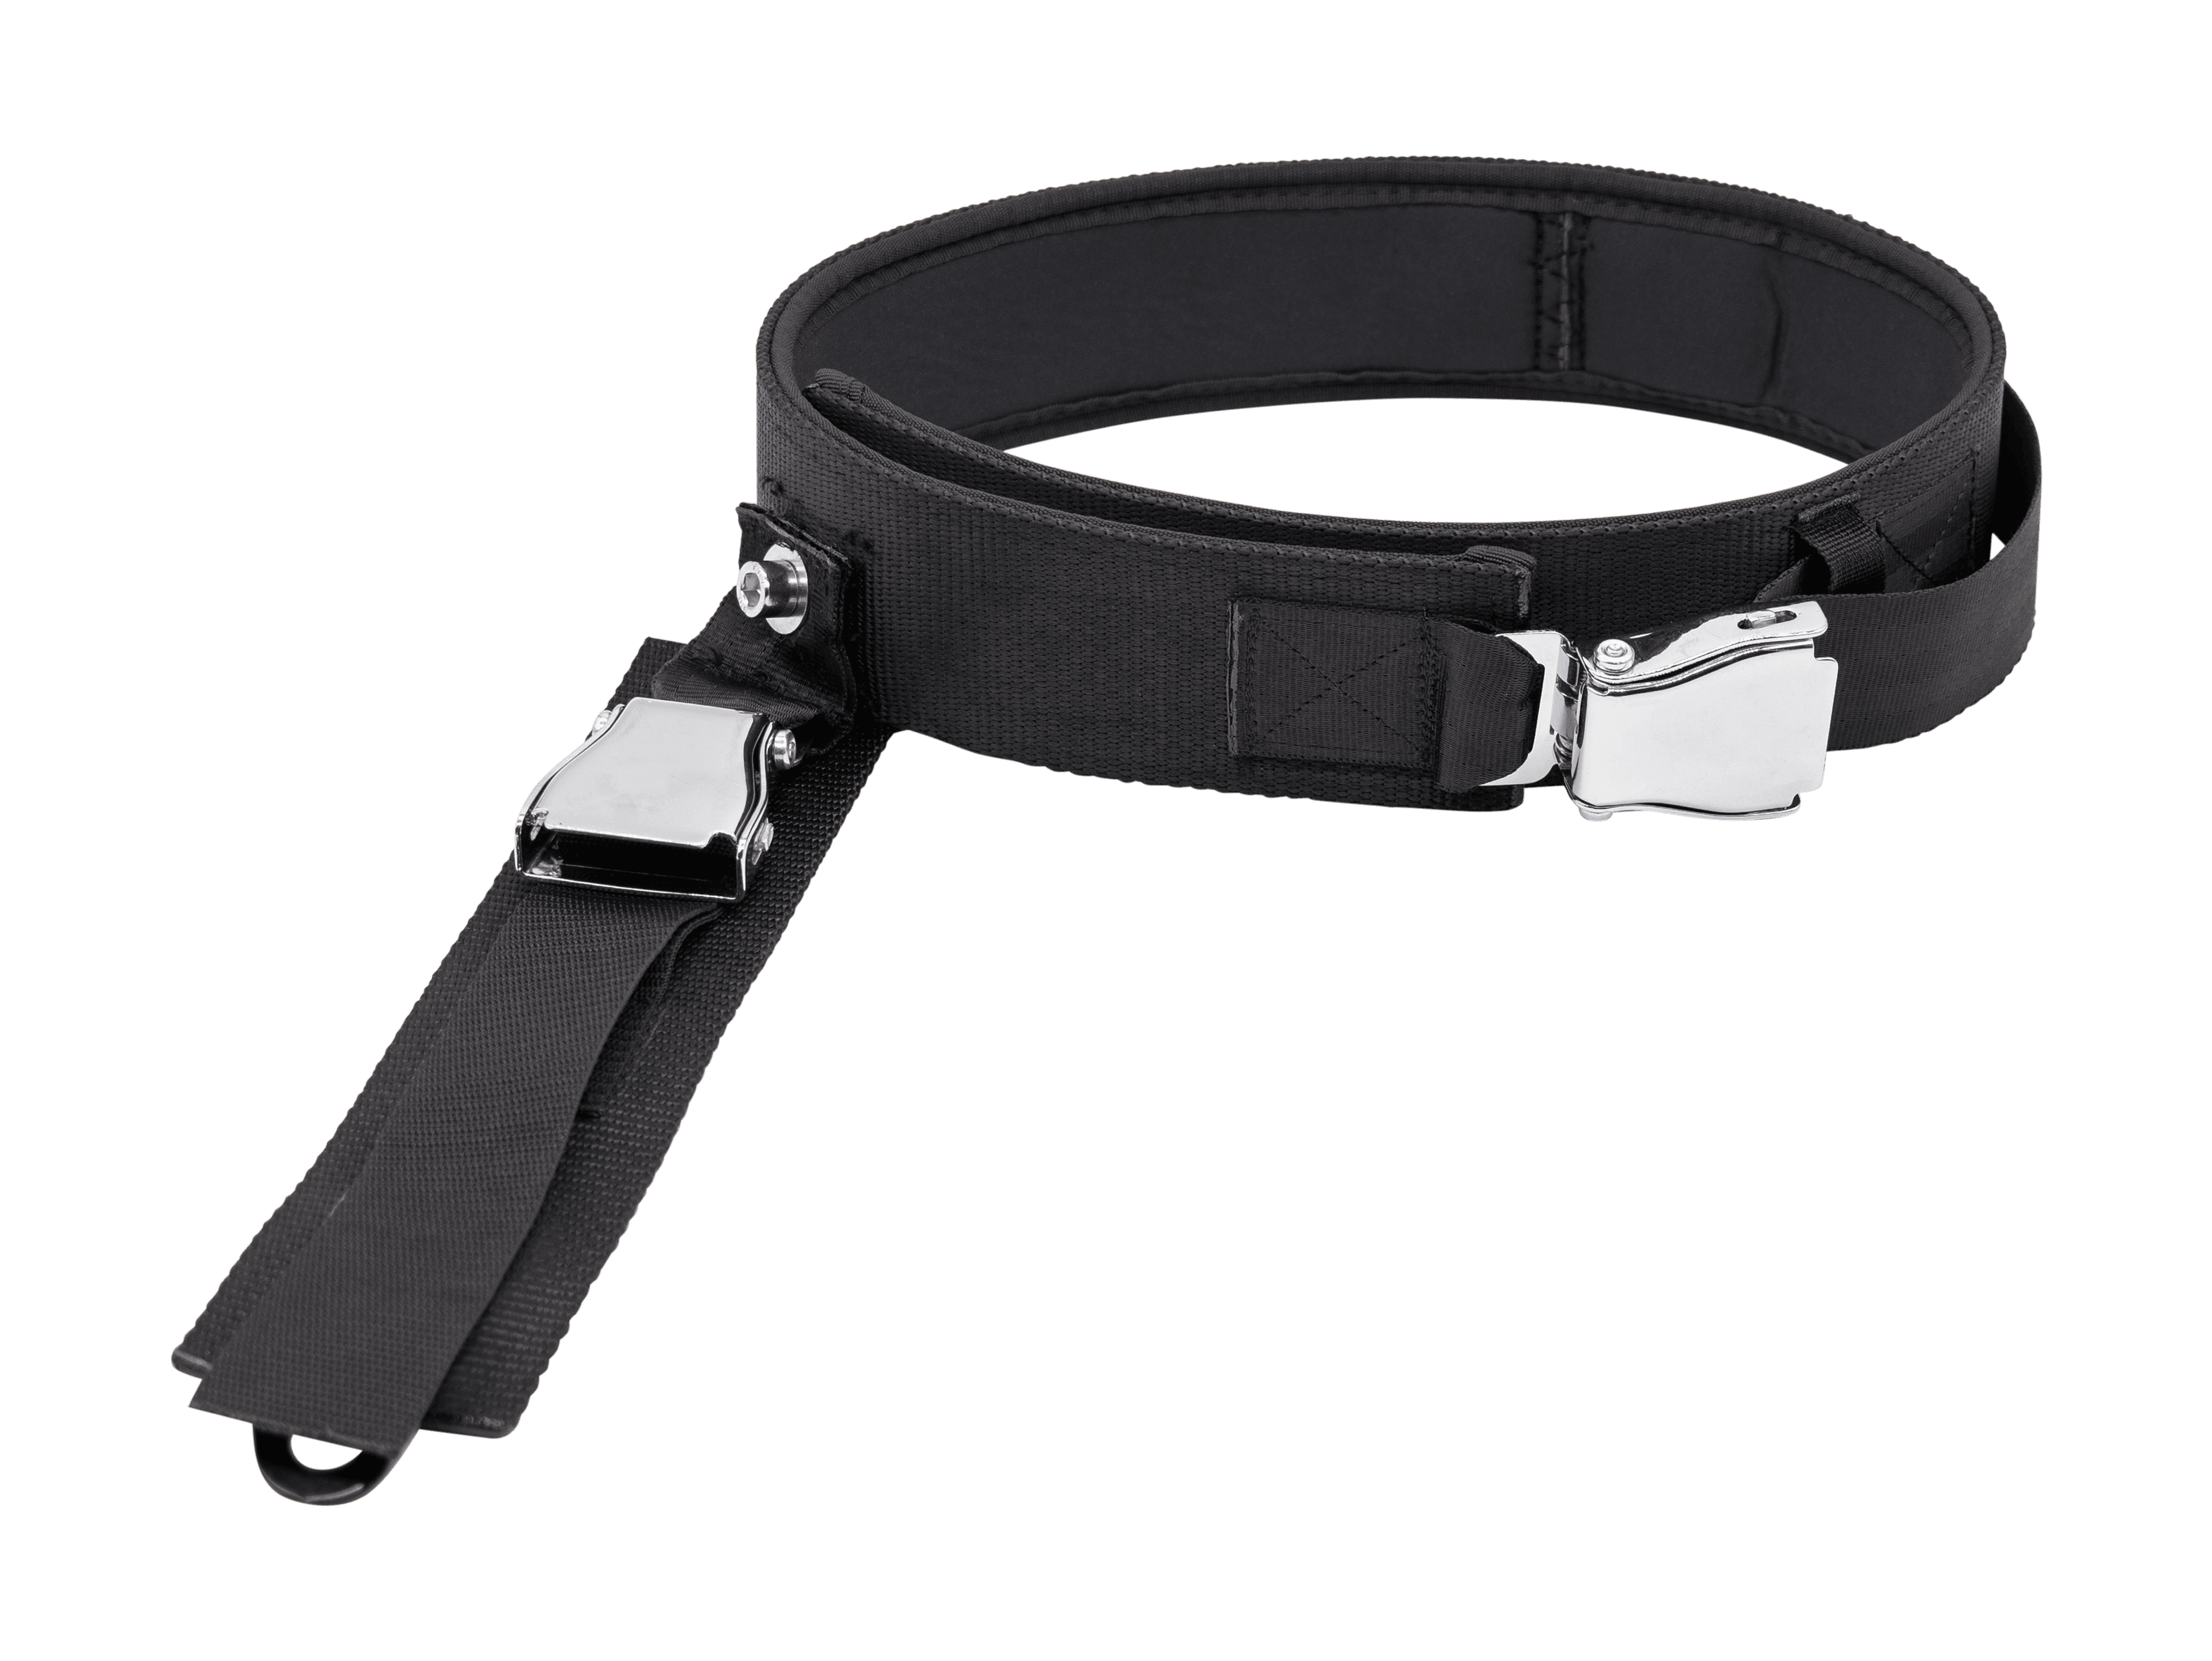 Custom designed belt with detaching latch release